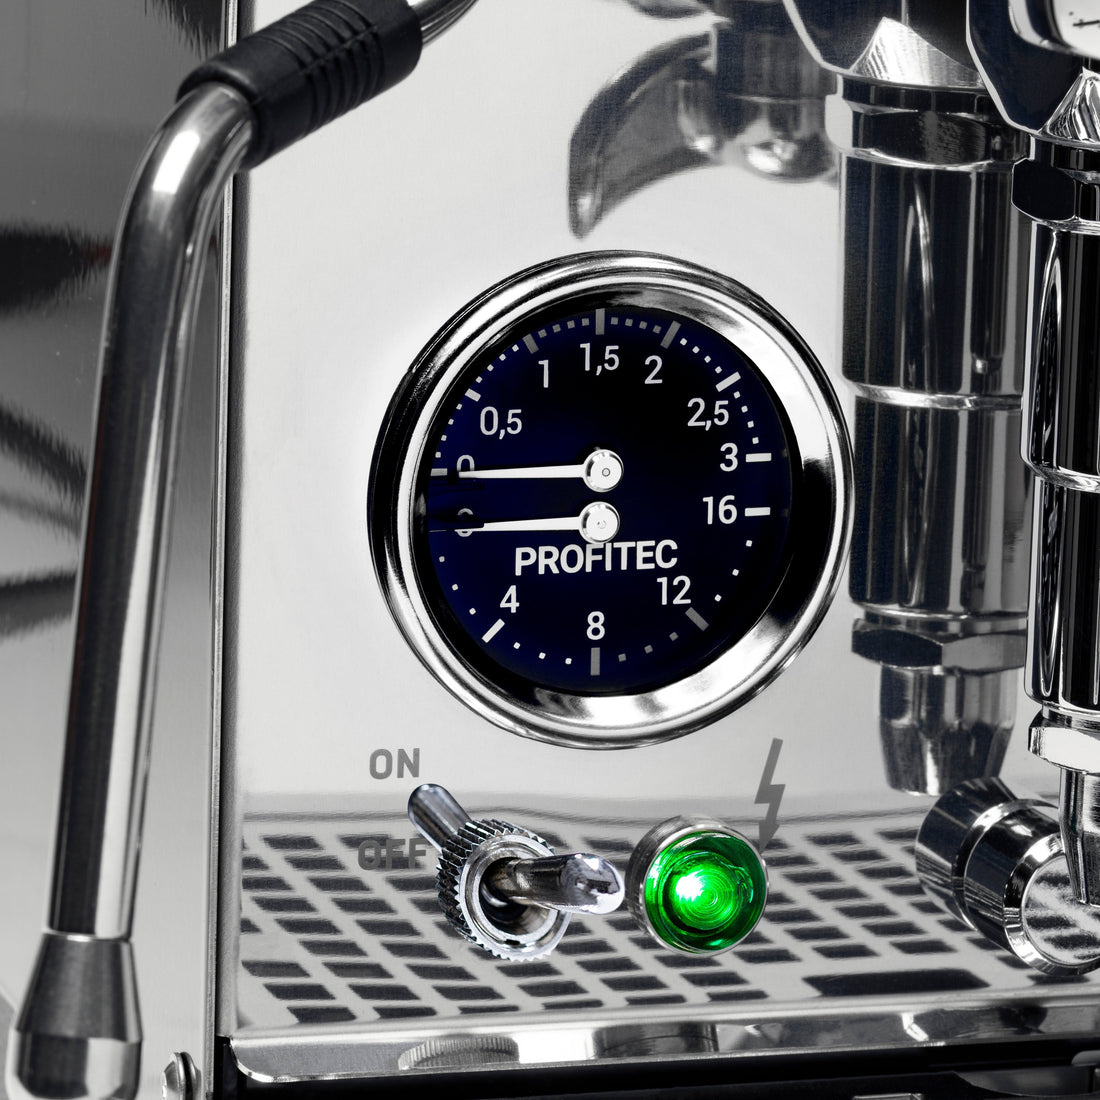 Profitec Pro 400 Espresso Machine With Flow Control and Olive Wood